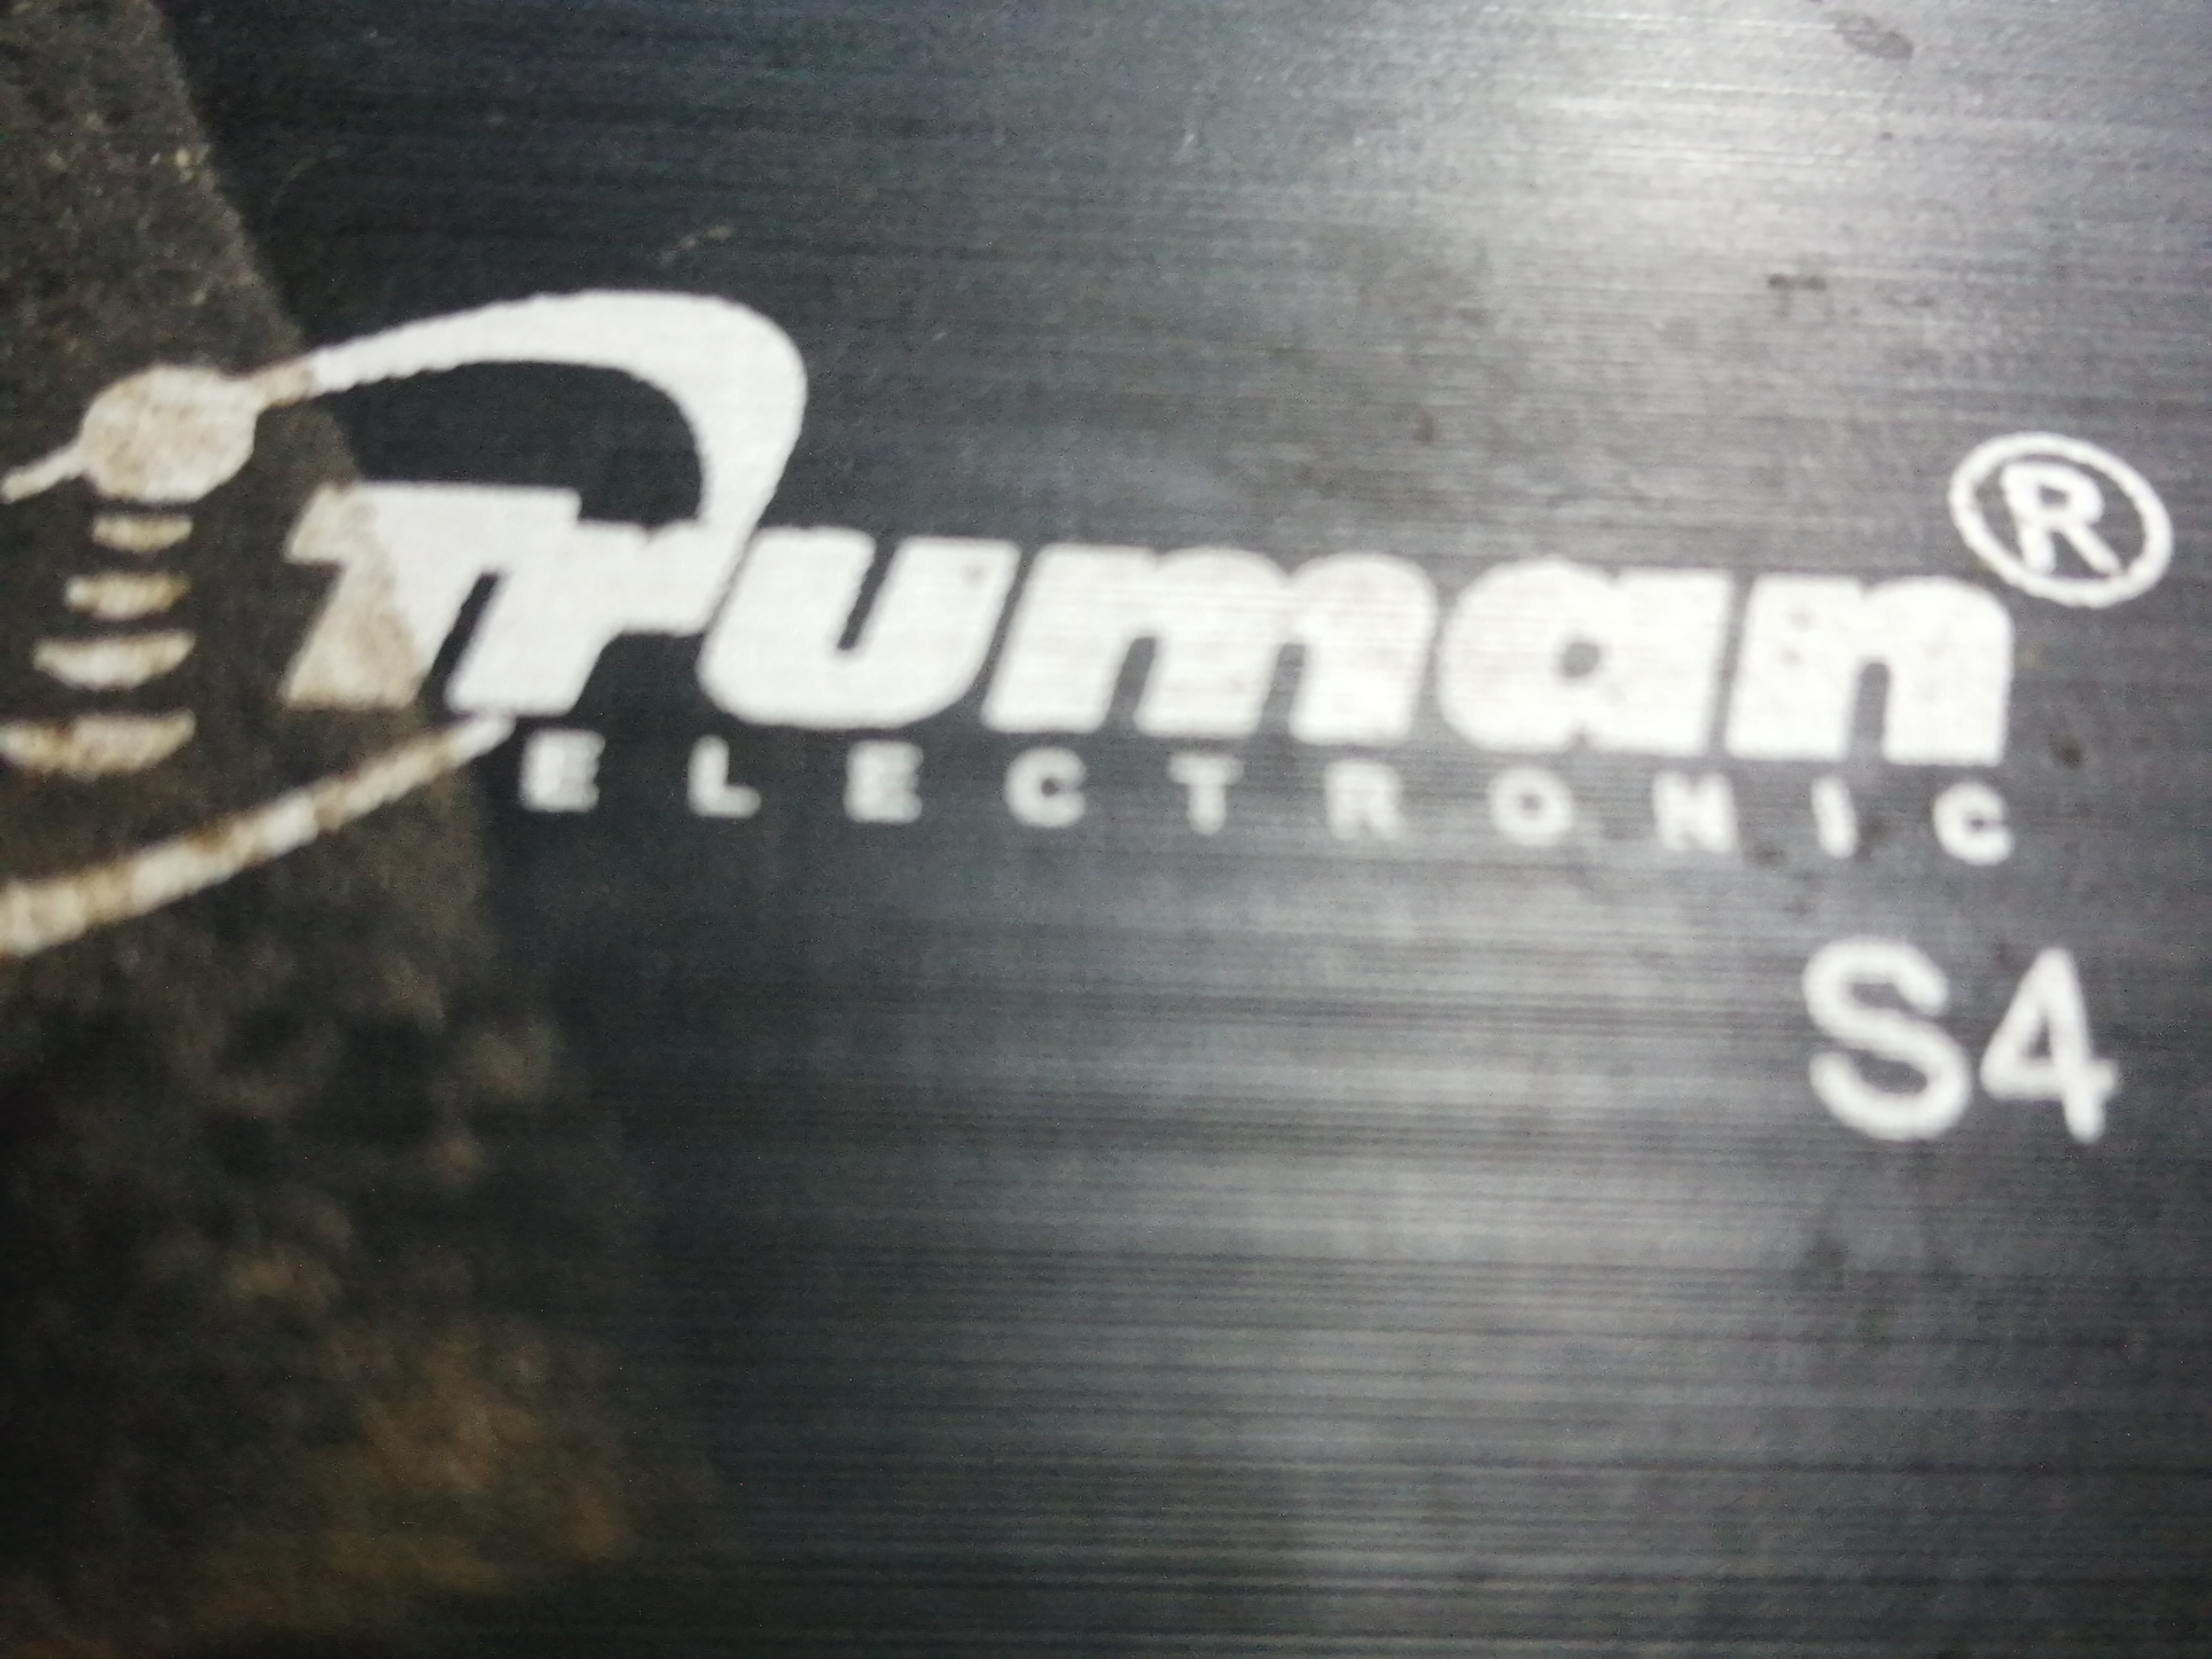 Truman S4 dump   Ali     5.jpg